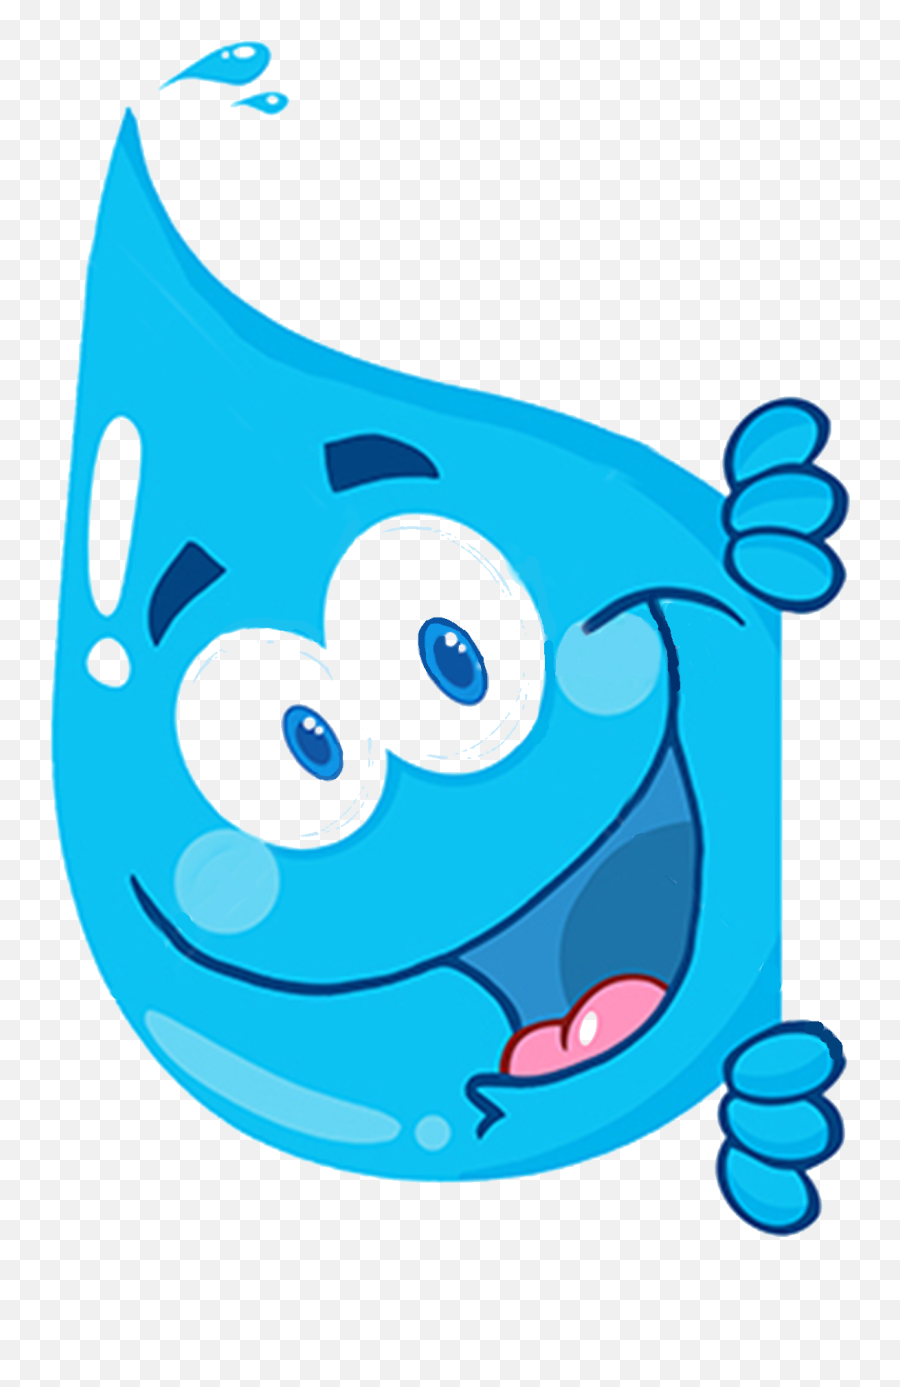 Drop Water Clip Art - Cartoon Water Drops Png Download Cute Water Drop Cartoon,Water Droplet Png